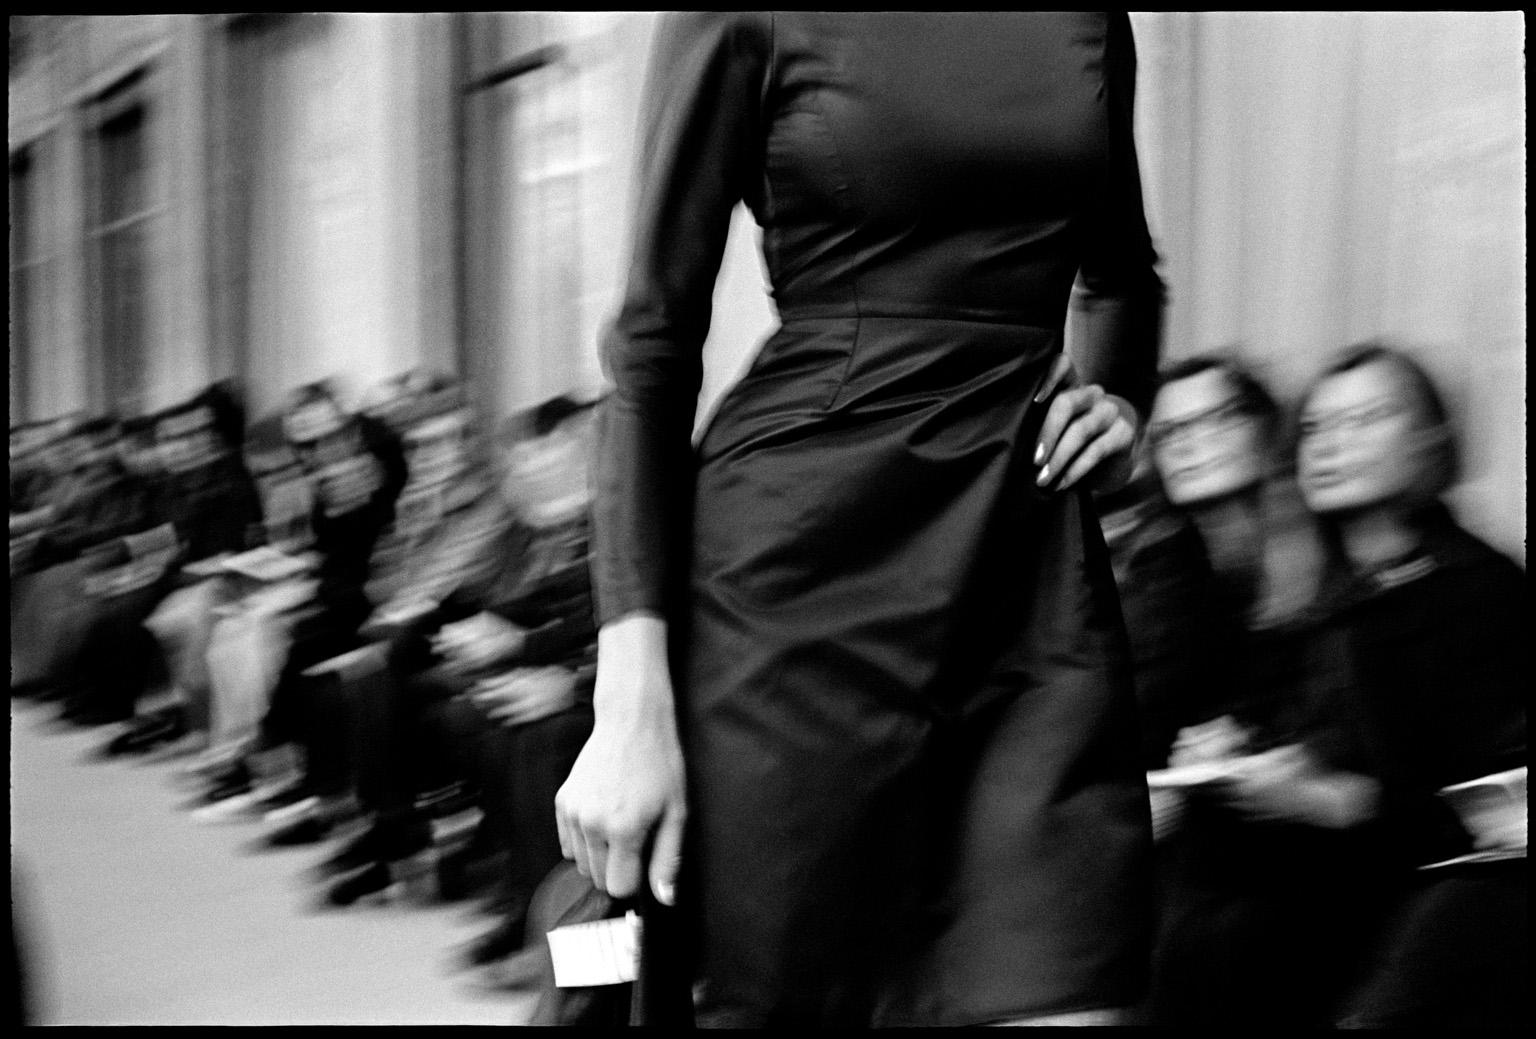 Jean-Luc Fievet Figurative Photograph - Jerome L' Huillier - Noir - Black and White Photograph of Fashion Show